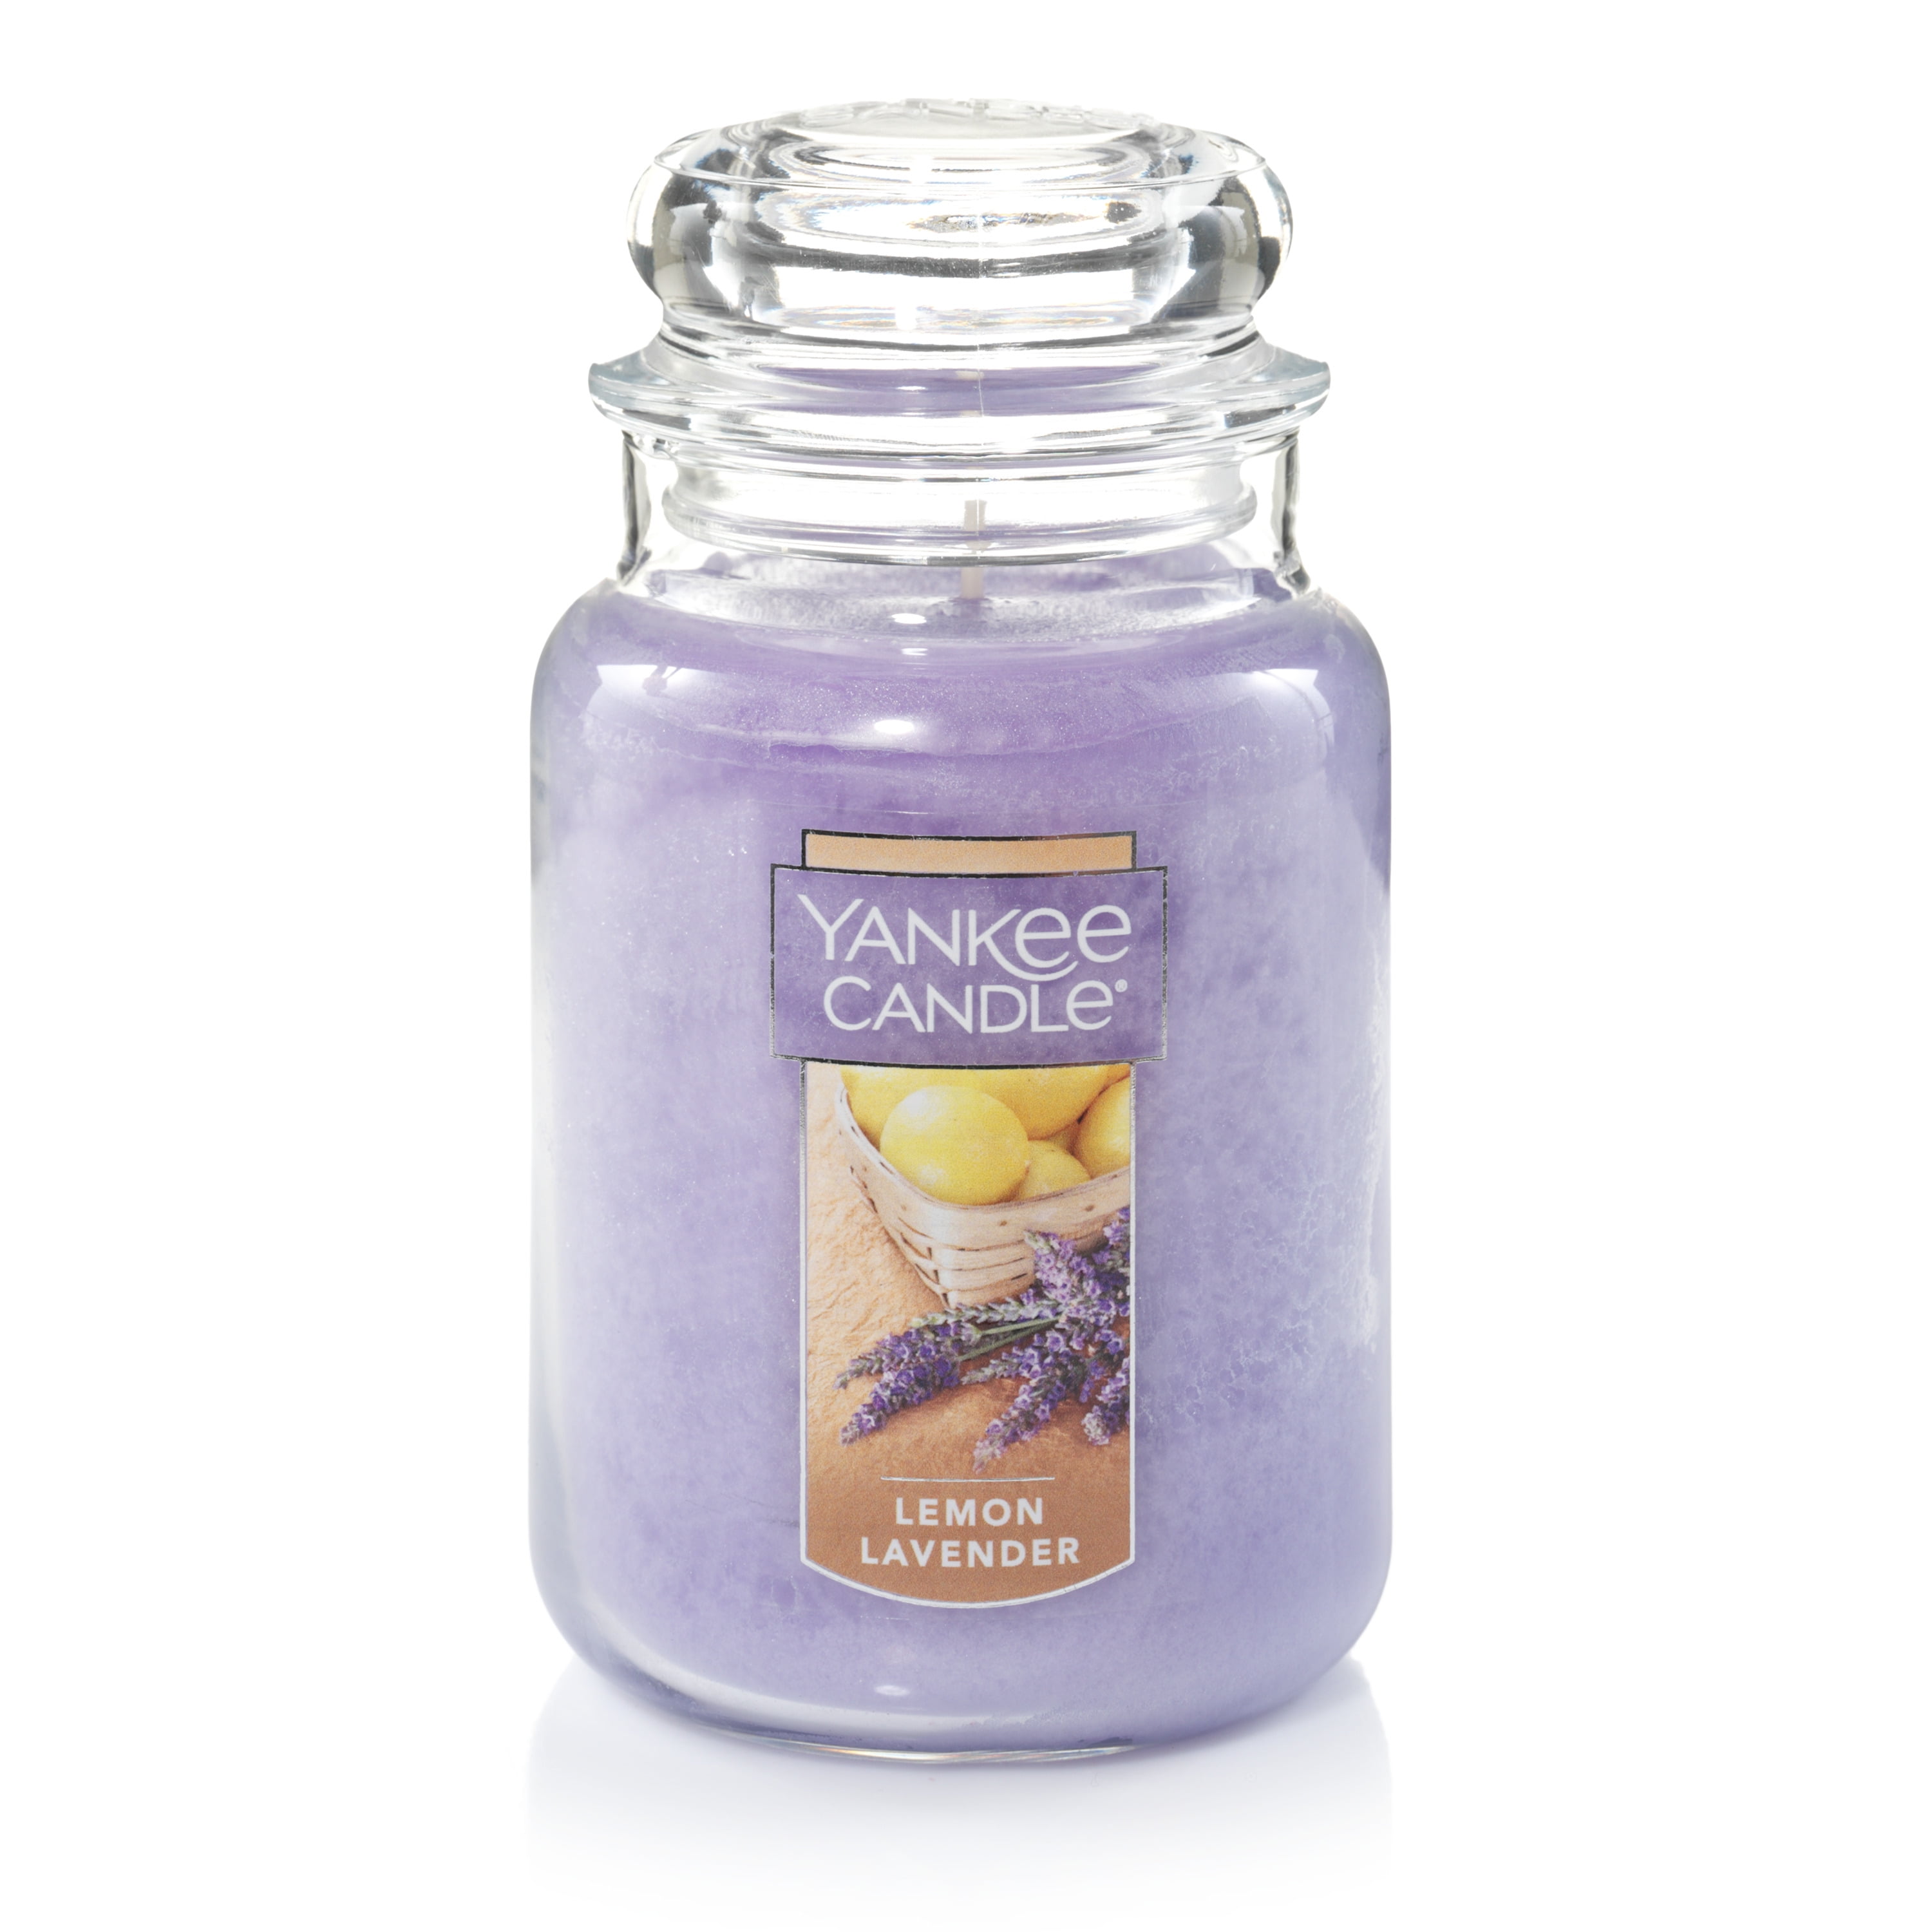  Yankee Candle 5038580069716 car jar Bonus Pack Lemon Lavender  op-3 szt. YCJBPLL, one Size, … : Everything Else